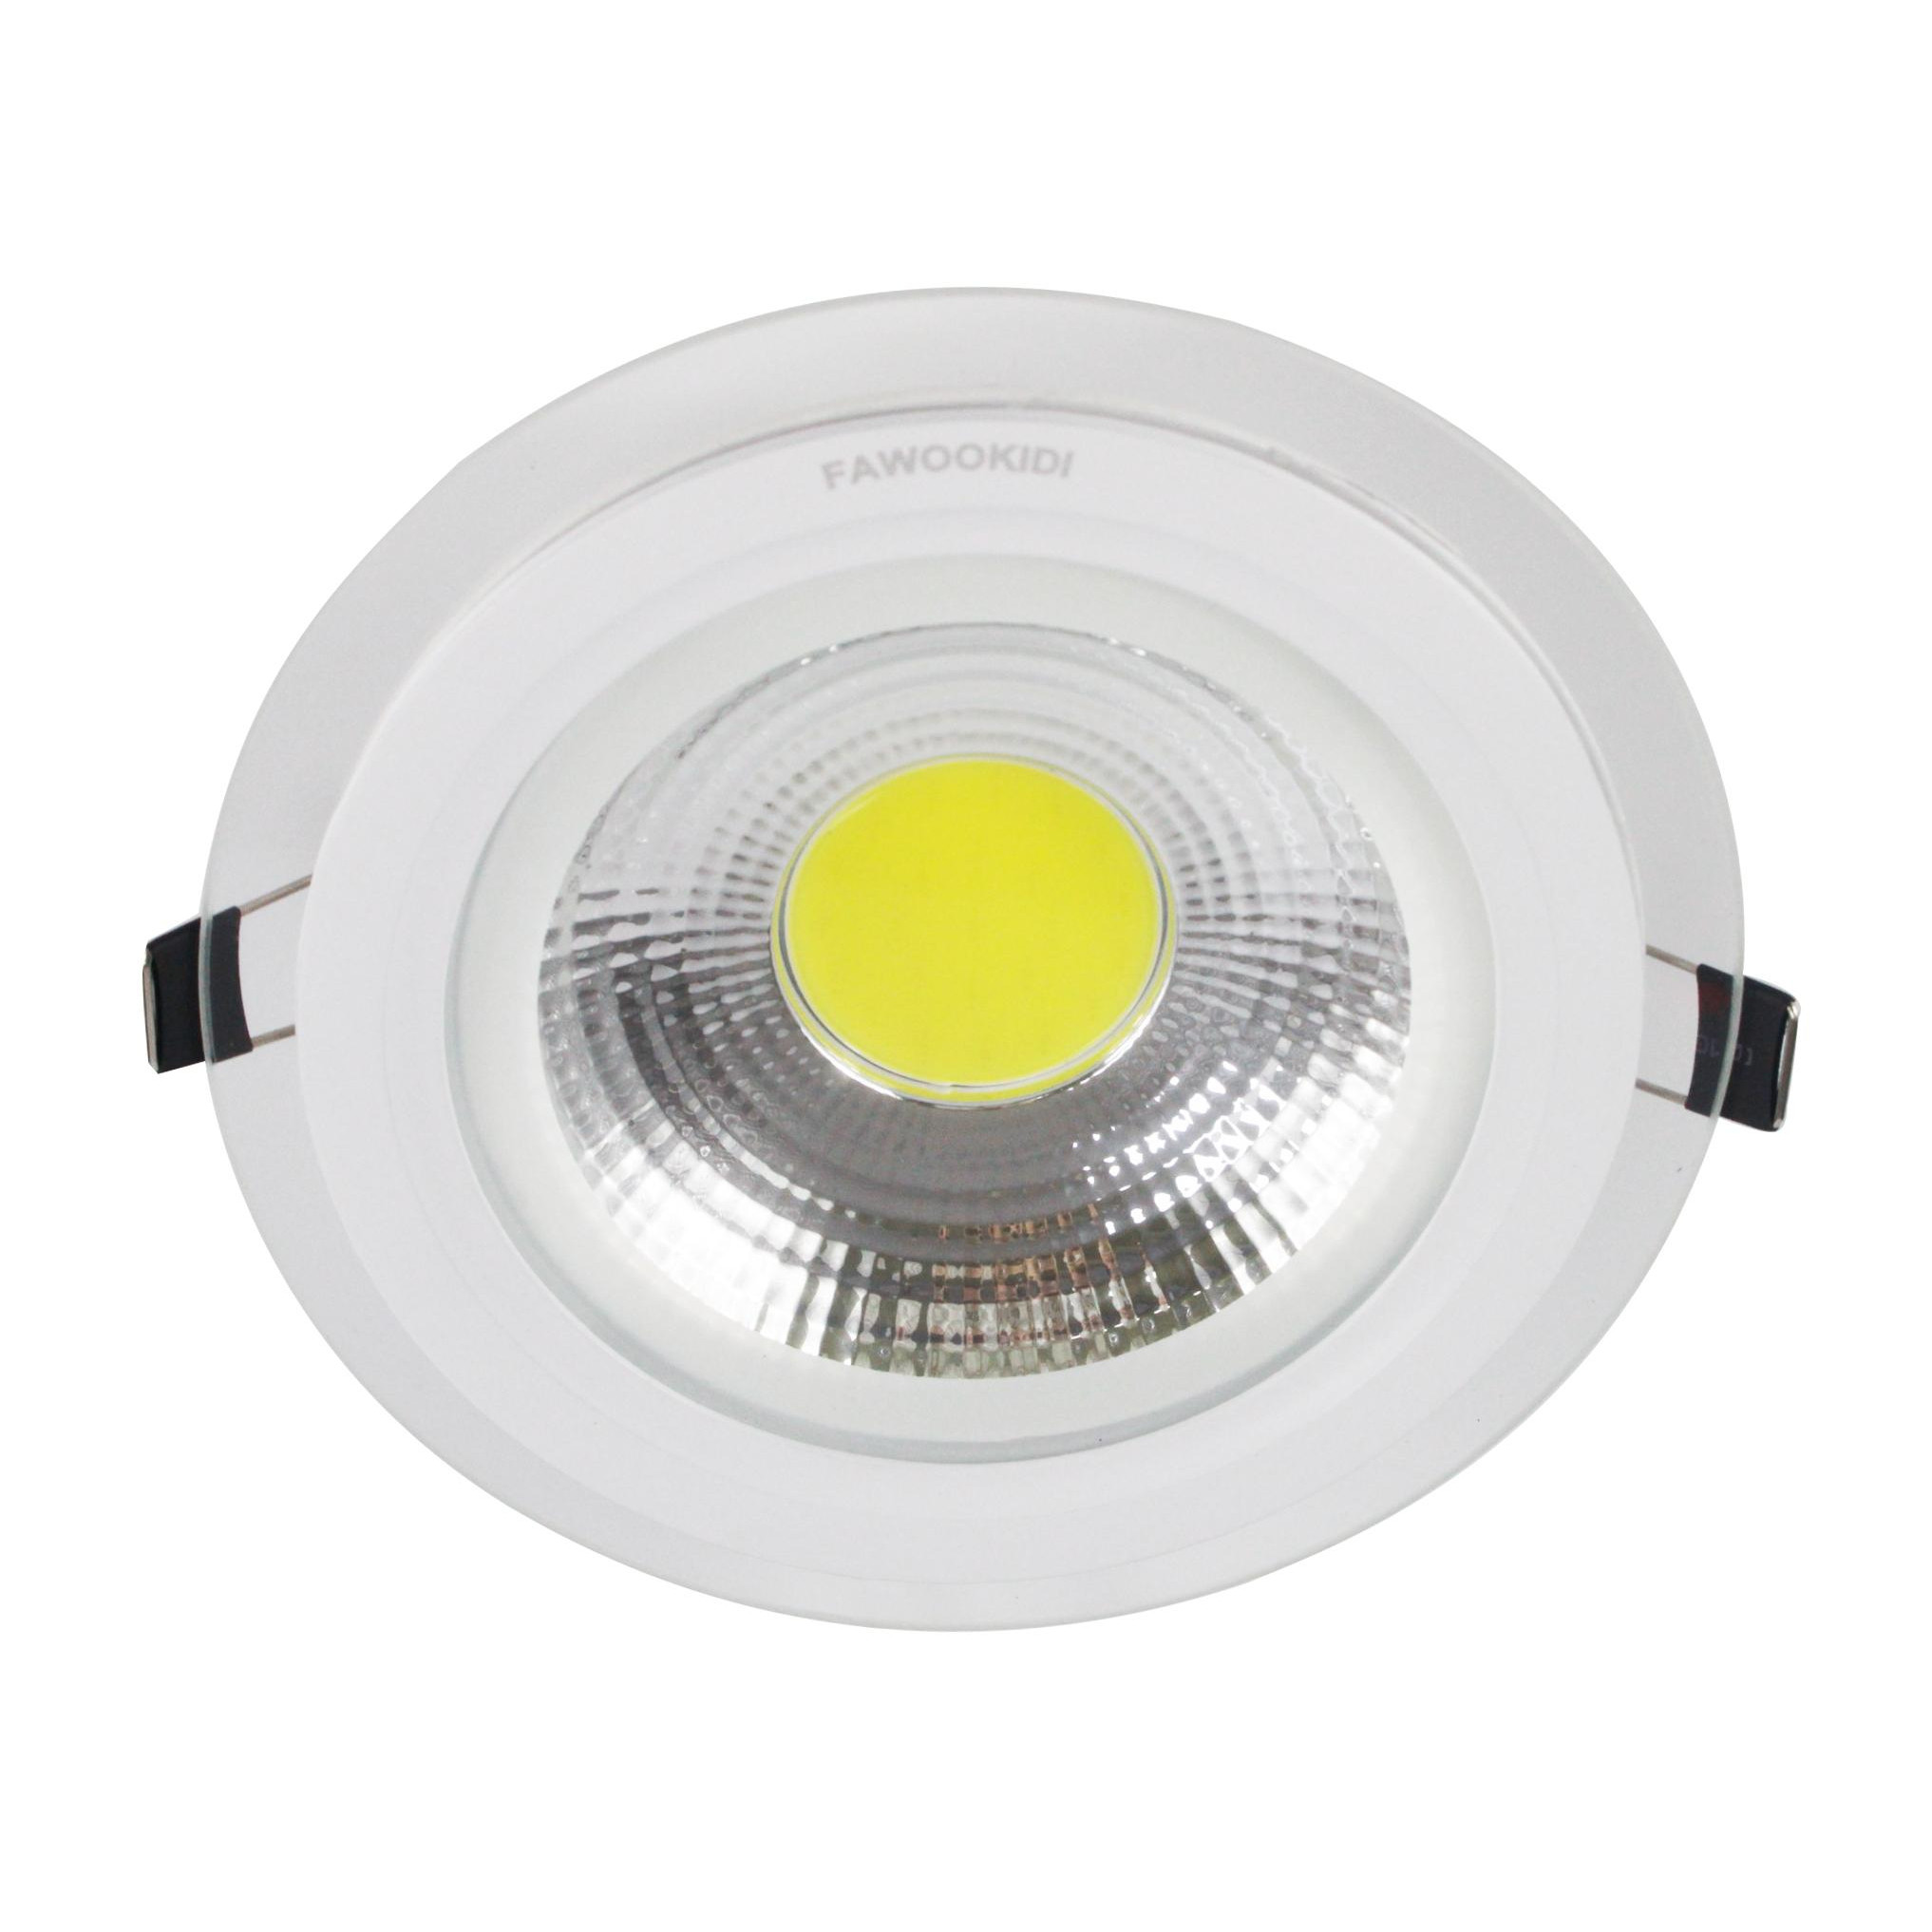 Đèn led Downlight tròn mặt kính FK-DTK502-5W Fawookidi